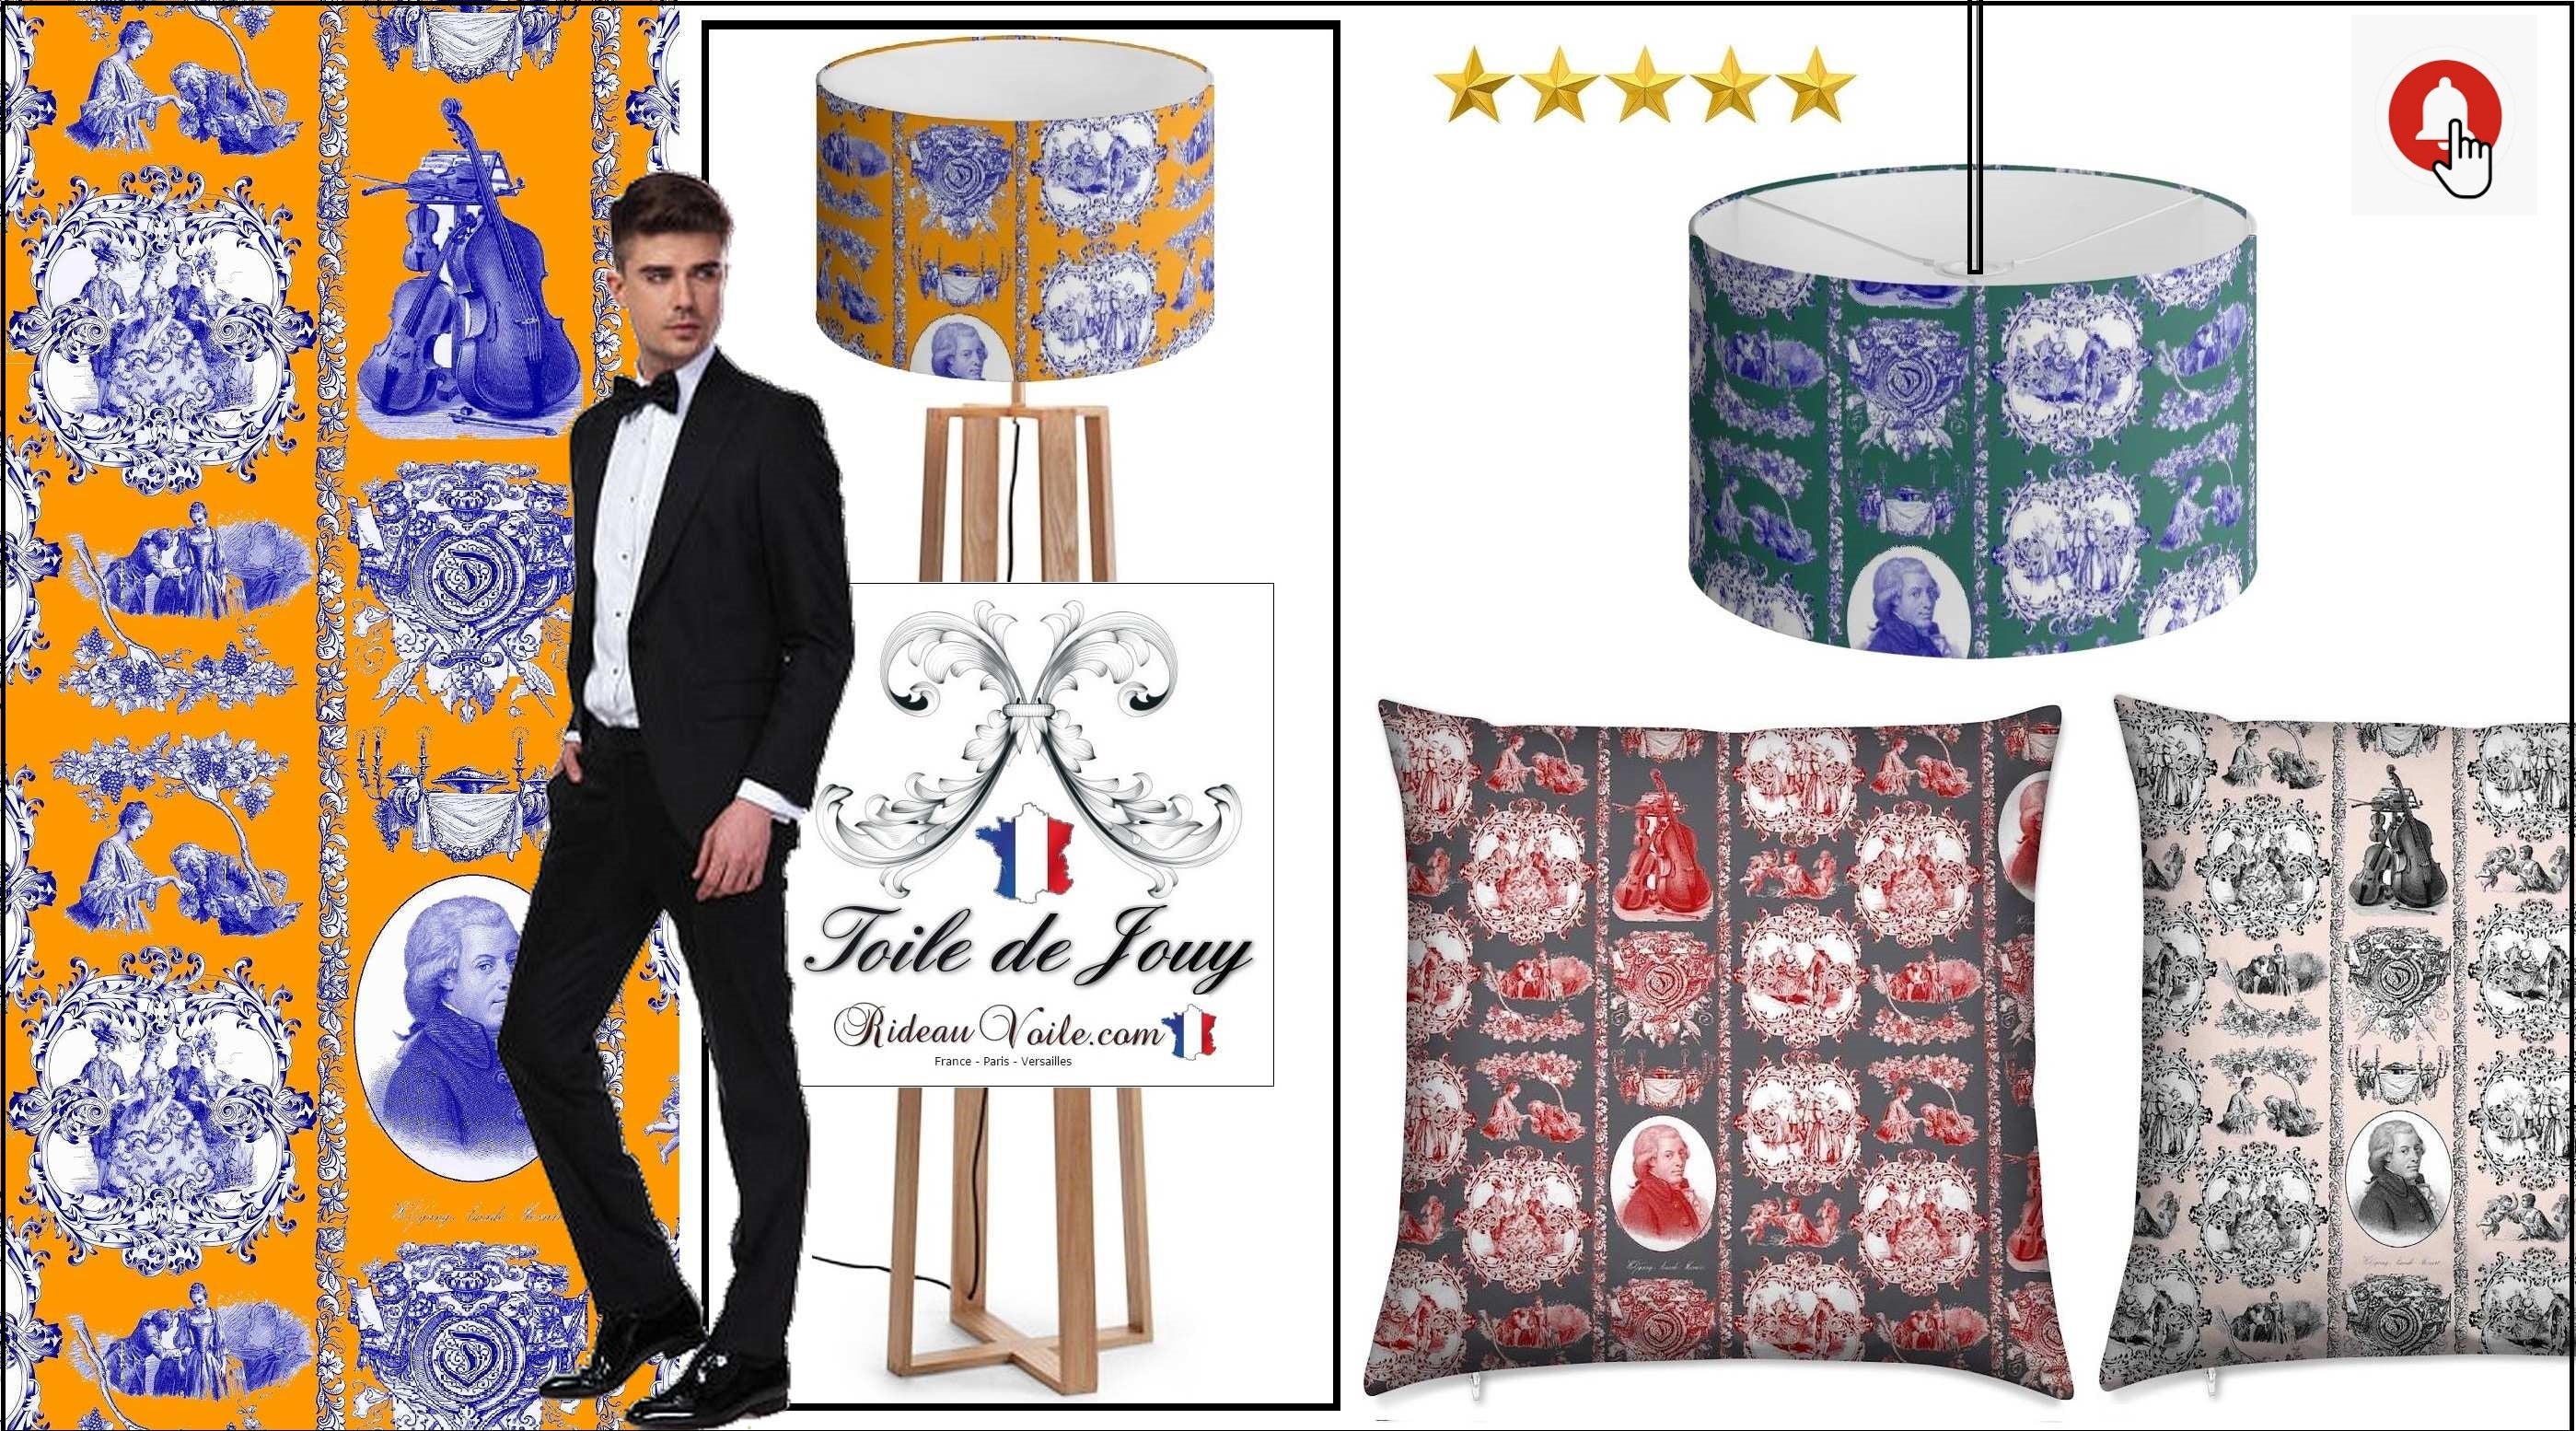 toile de jouy fabrics luxury Paris collection interior designer decorating home hospitality hotel